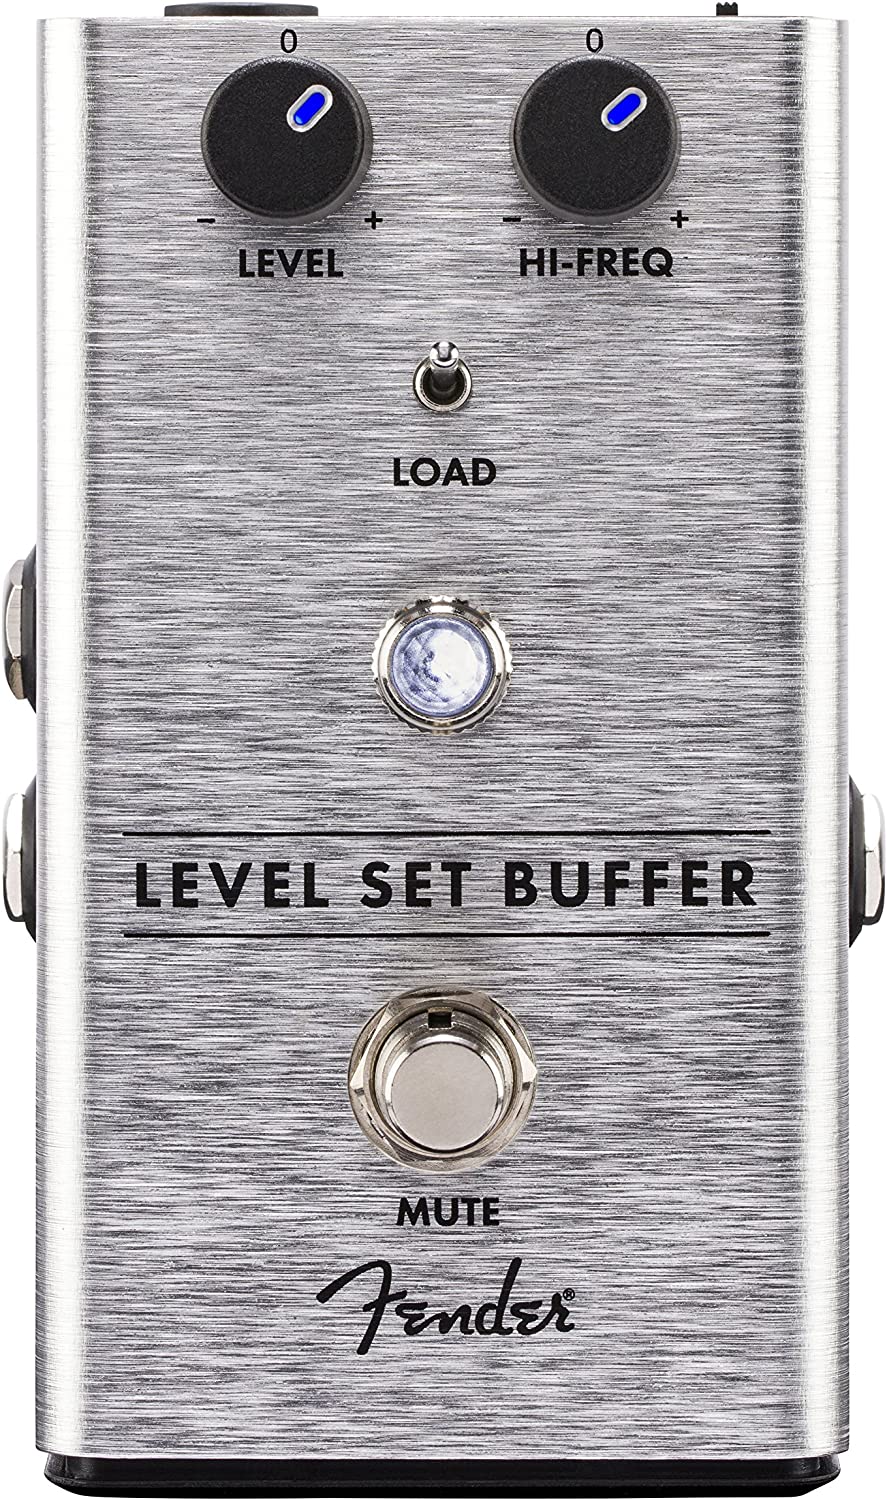 Fender Level Set Buffer Pedal on a white background